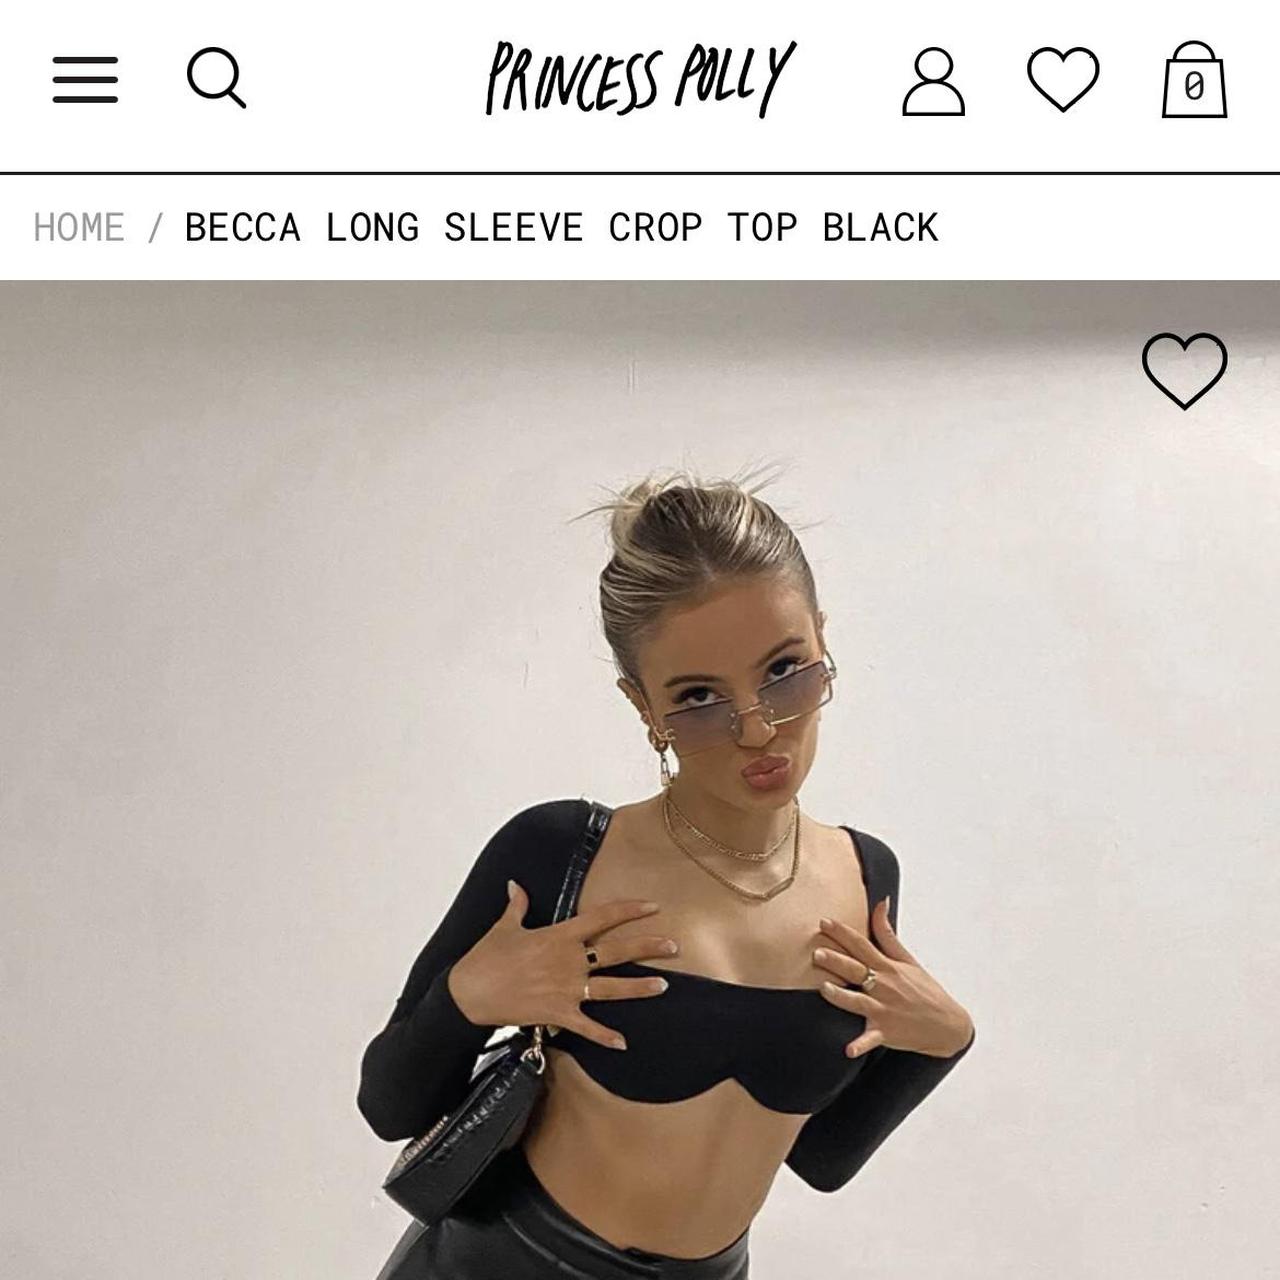 Becca Long Sleeve Crop Top Black